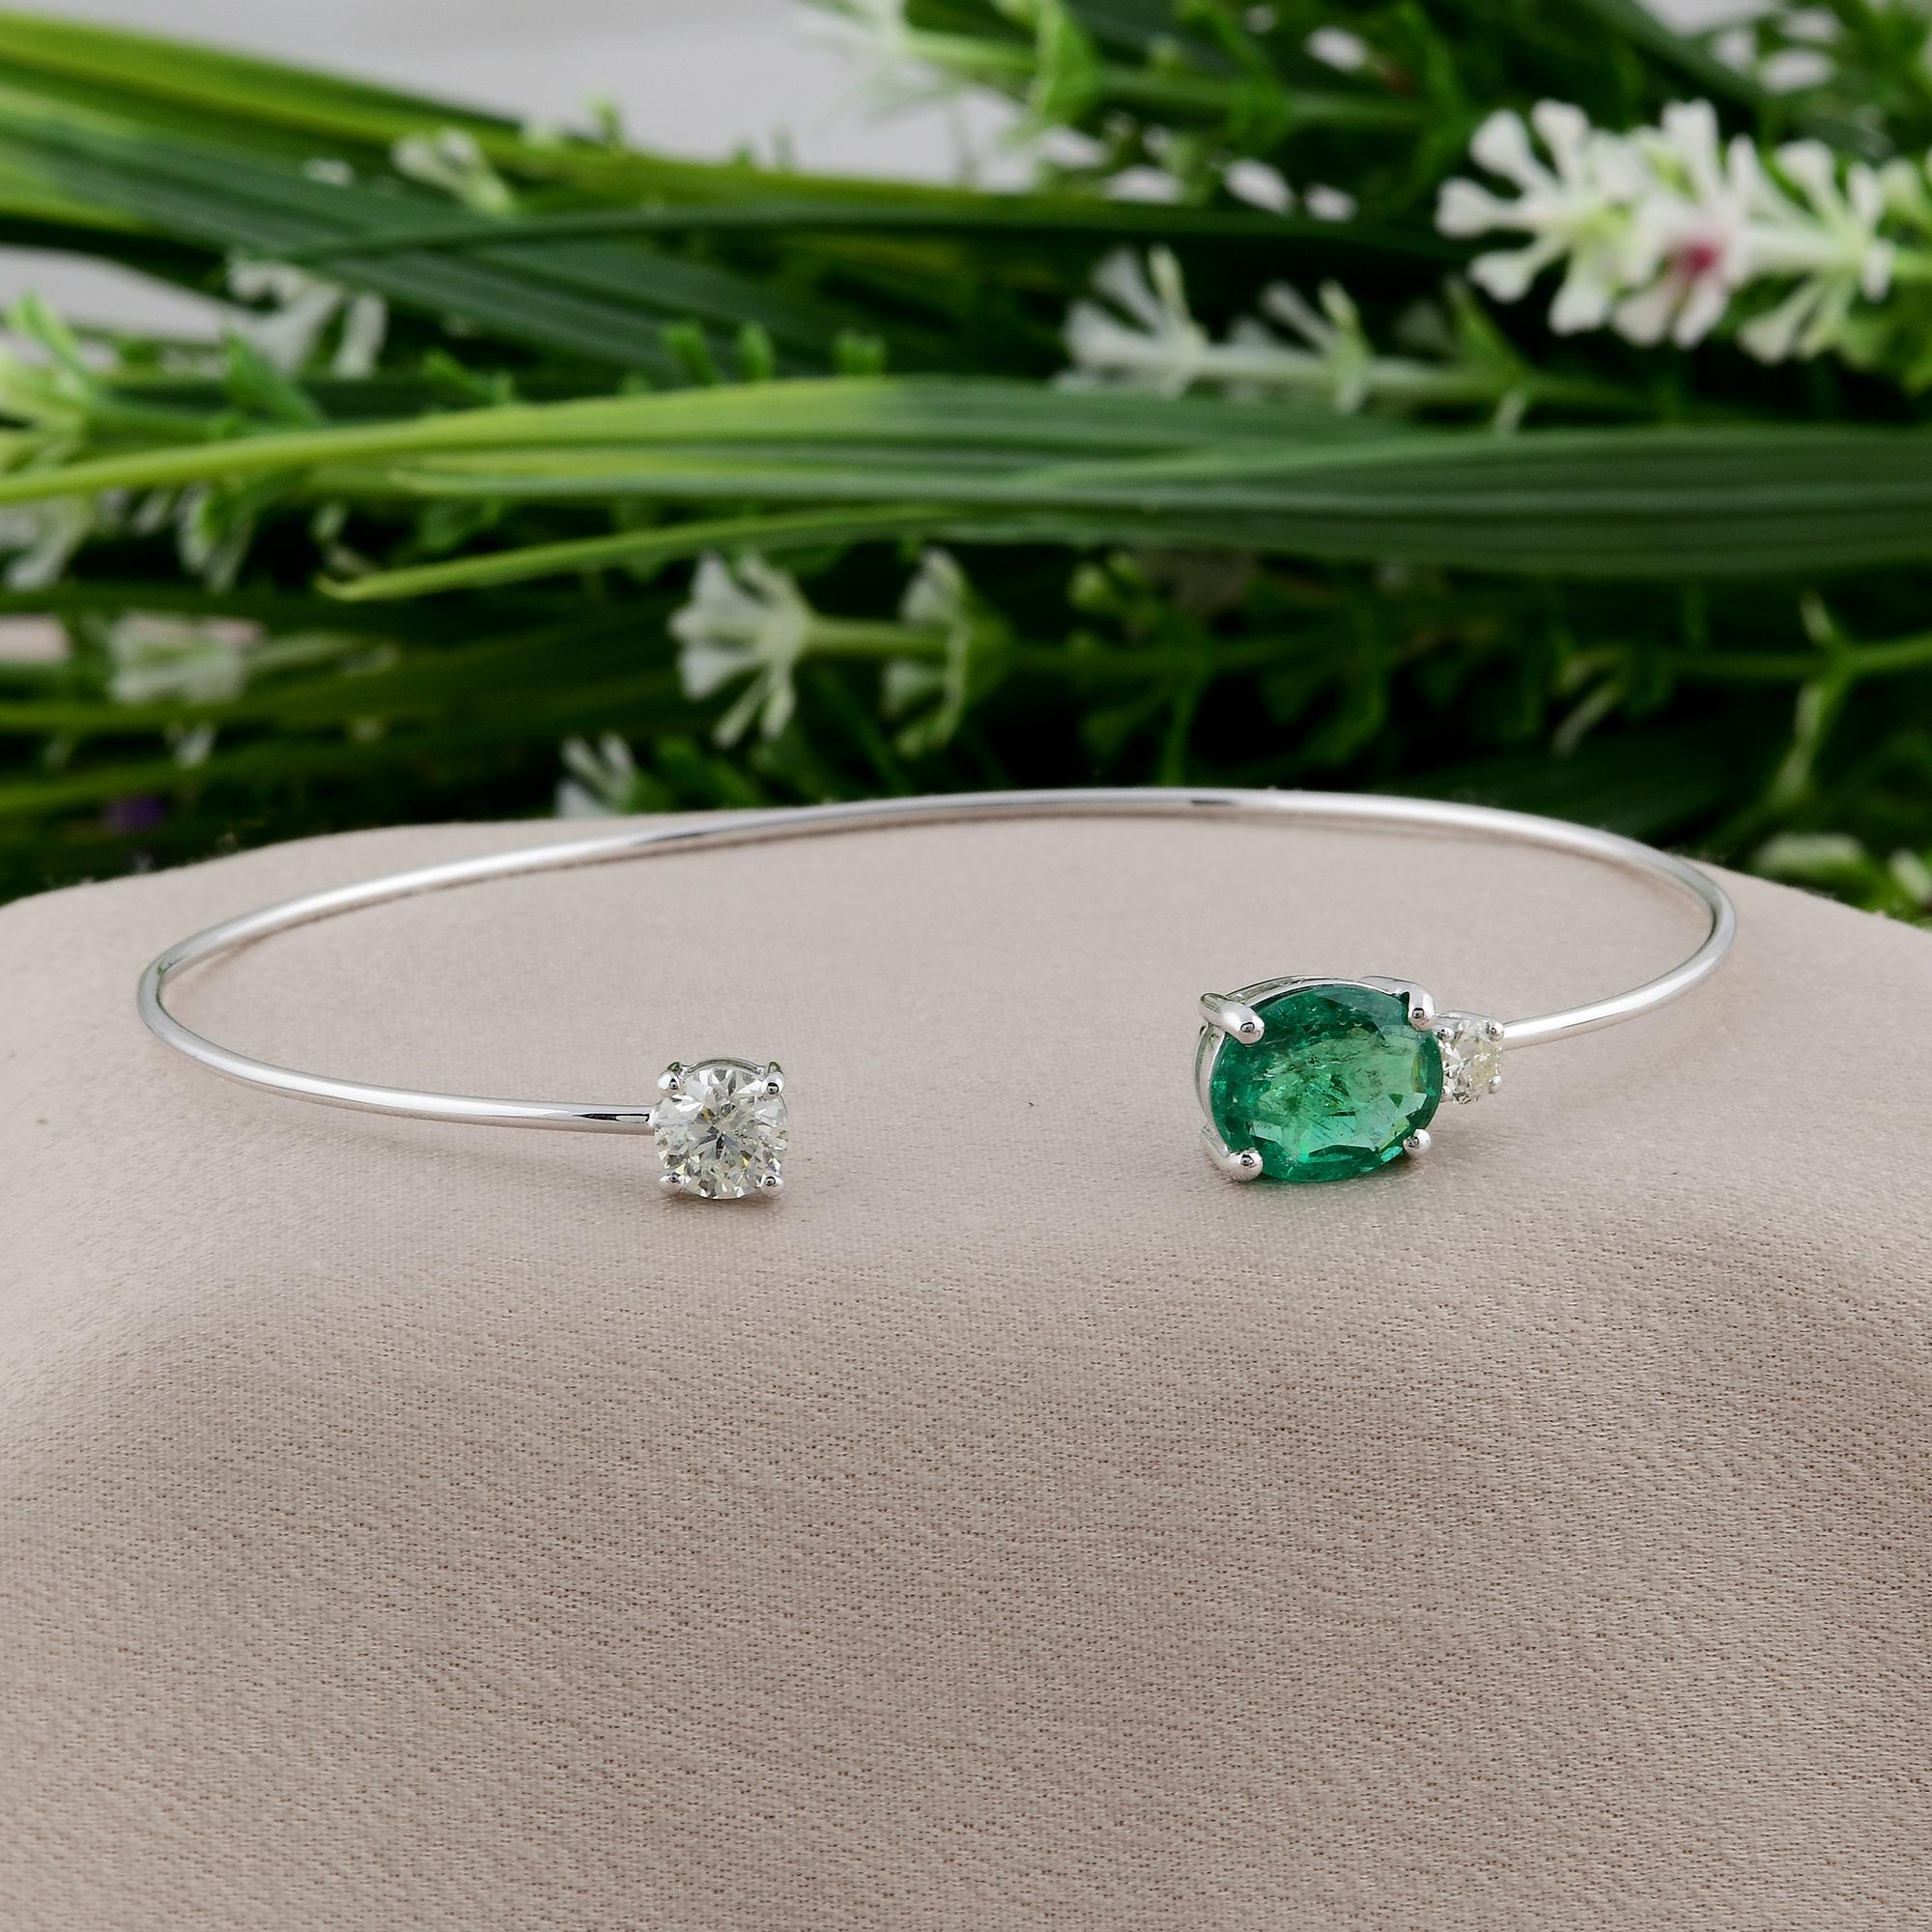 Oval Cut Oval Natural Emerald Gemstone Cuff Bangle Bracelet Diamond 18 Karat White Gold For Sale